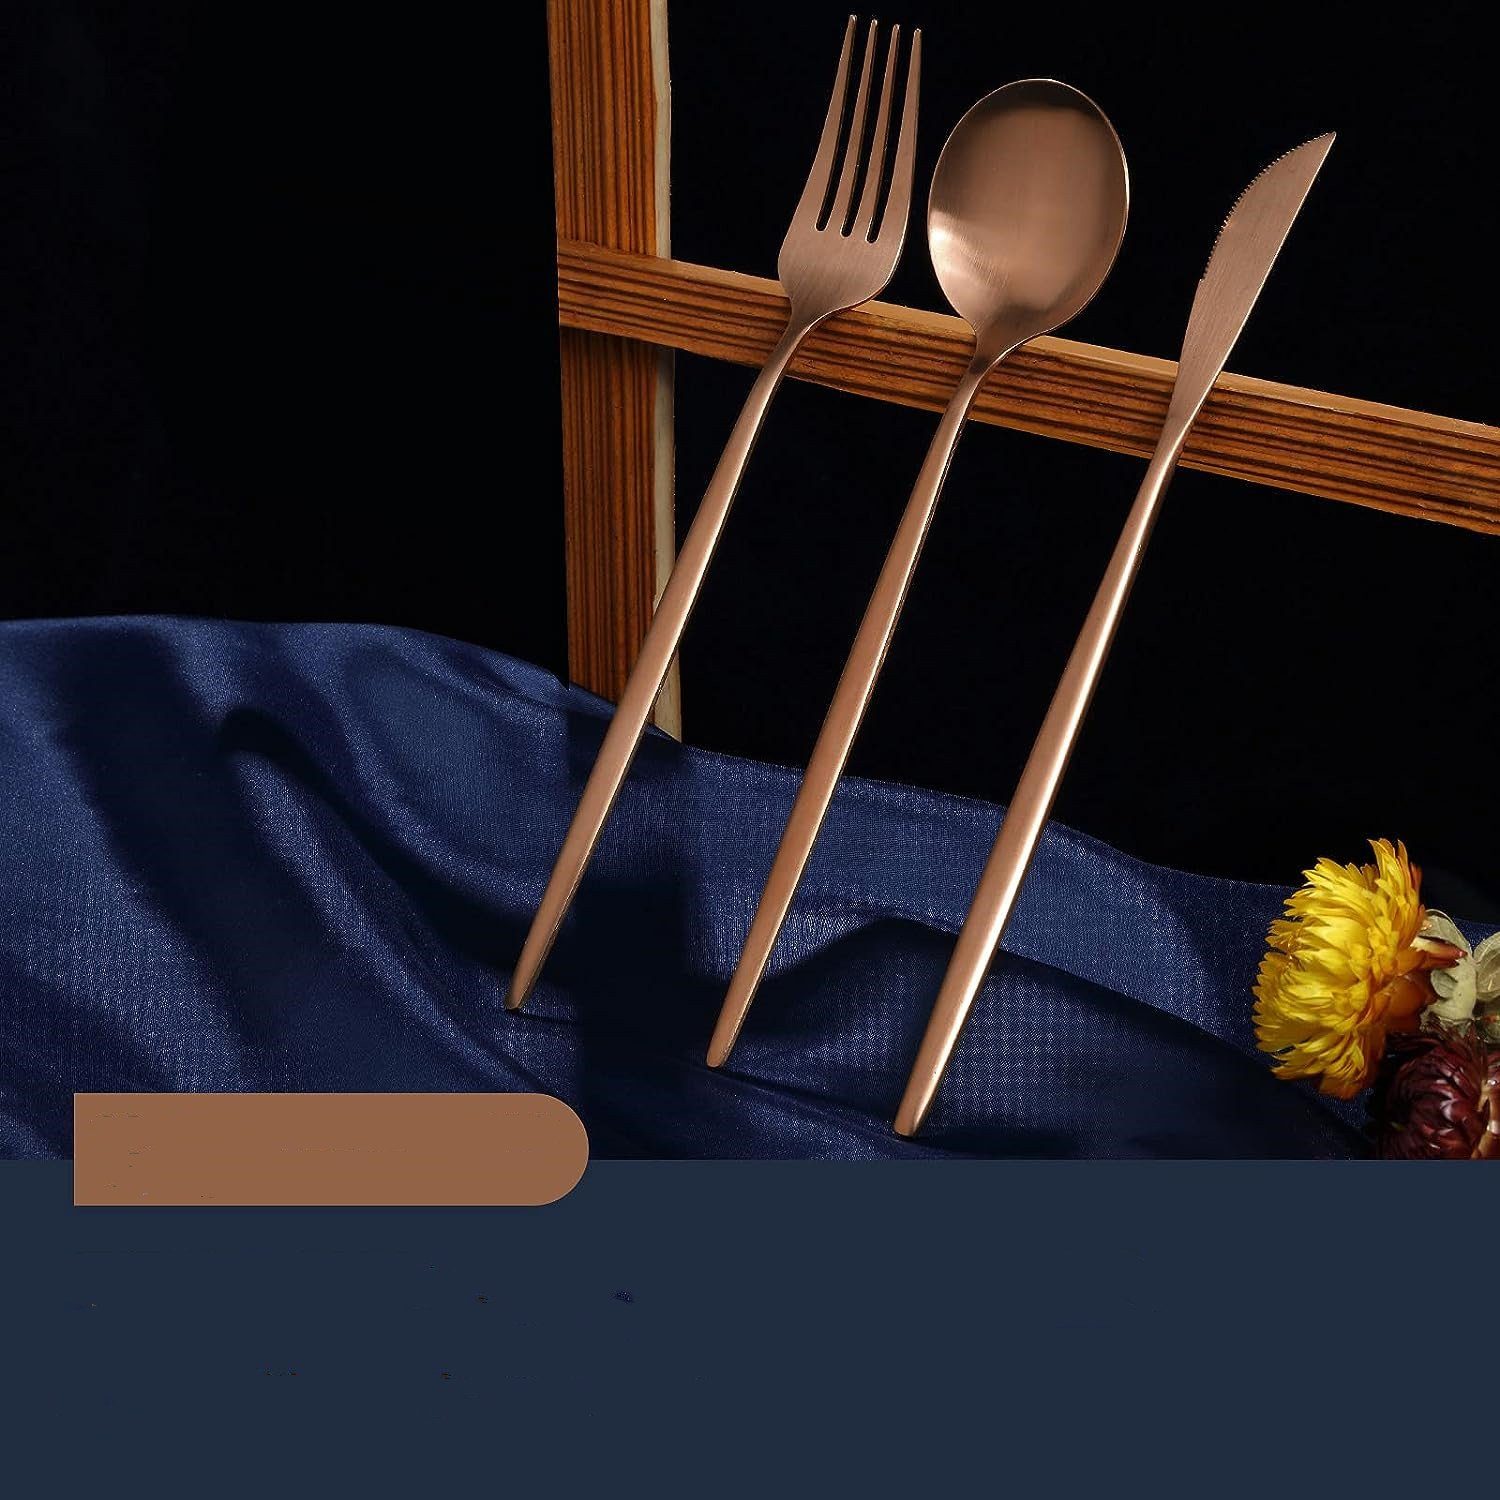 Rosegold KEENZO Essbesteck Set Messer Gabel Löffel mit Edelstahl 72teilig Besteck-Set